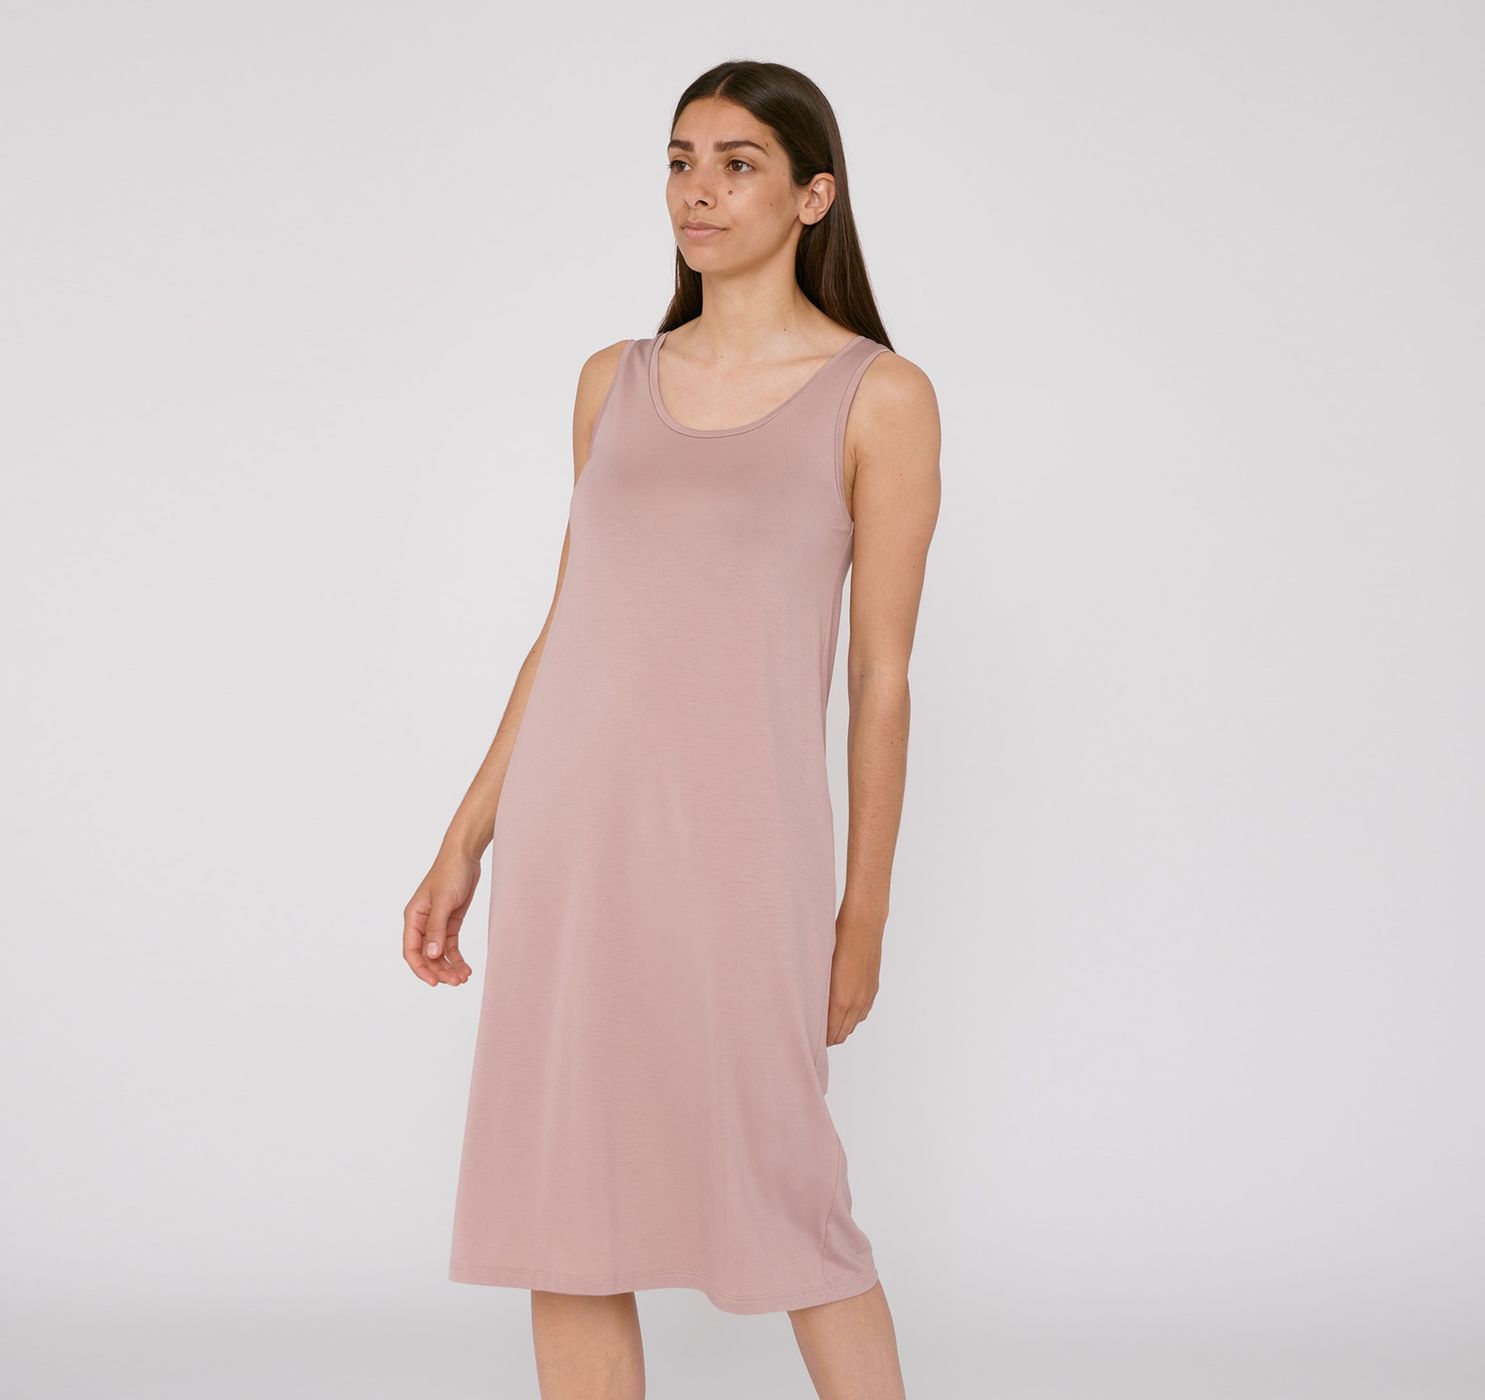 Organic Basics W's TENCEL Lite Dress Dusty Rose Dress